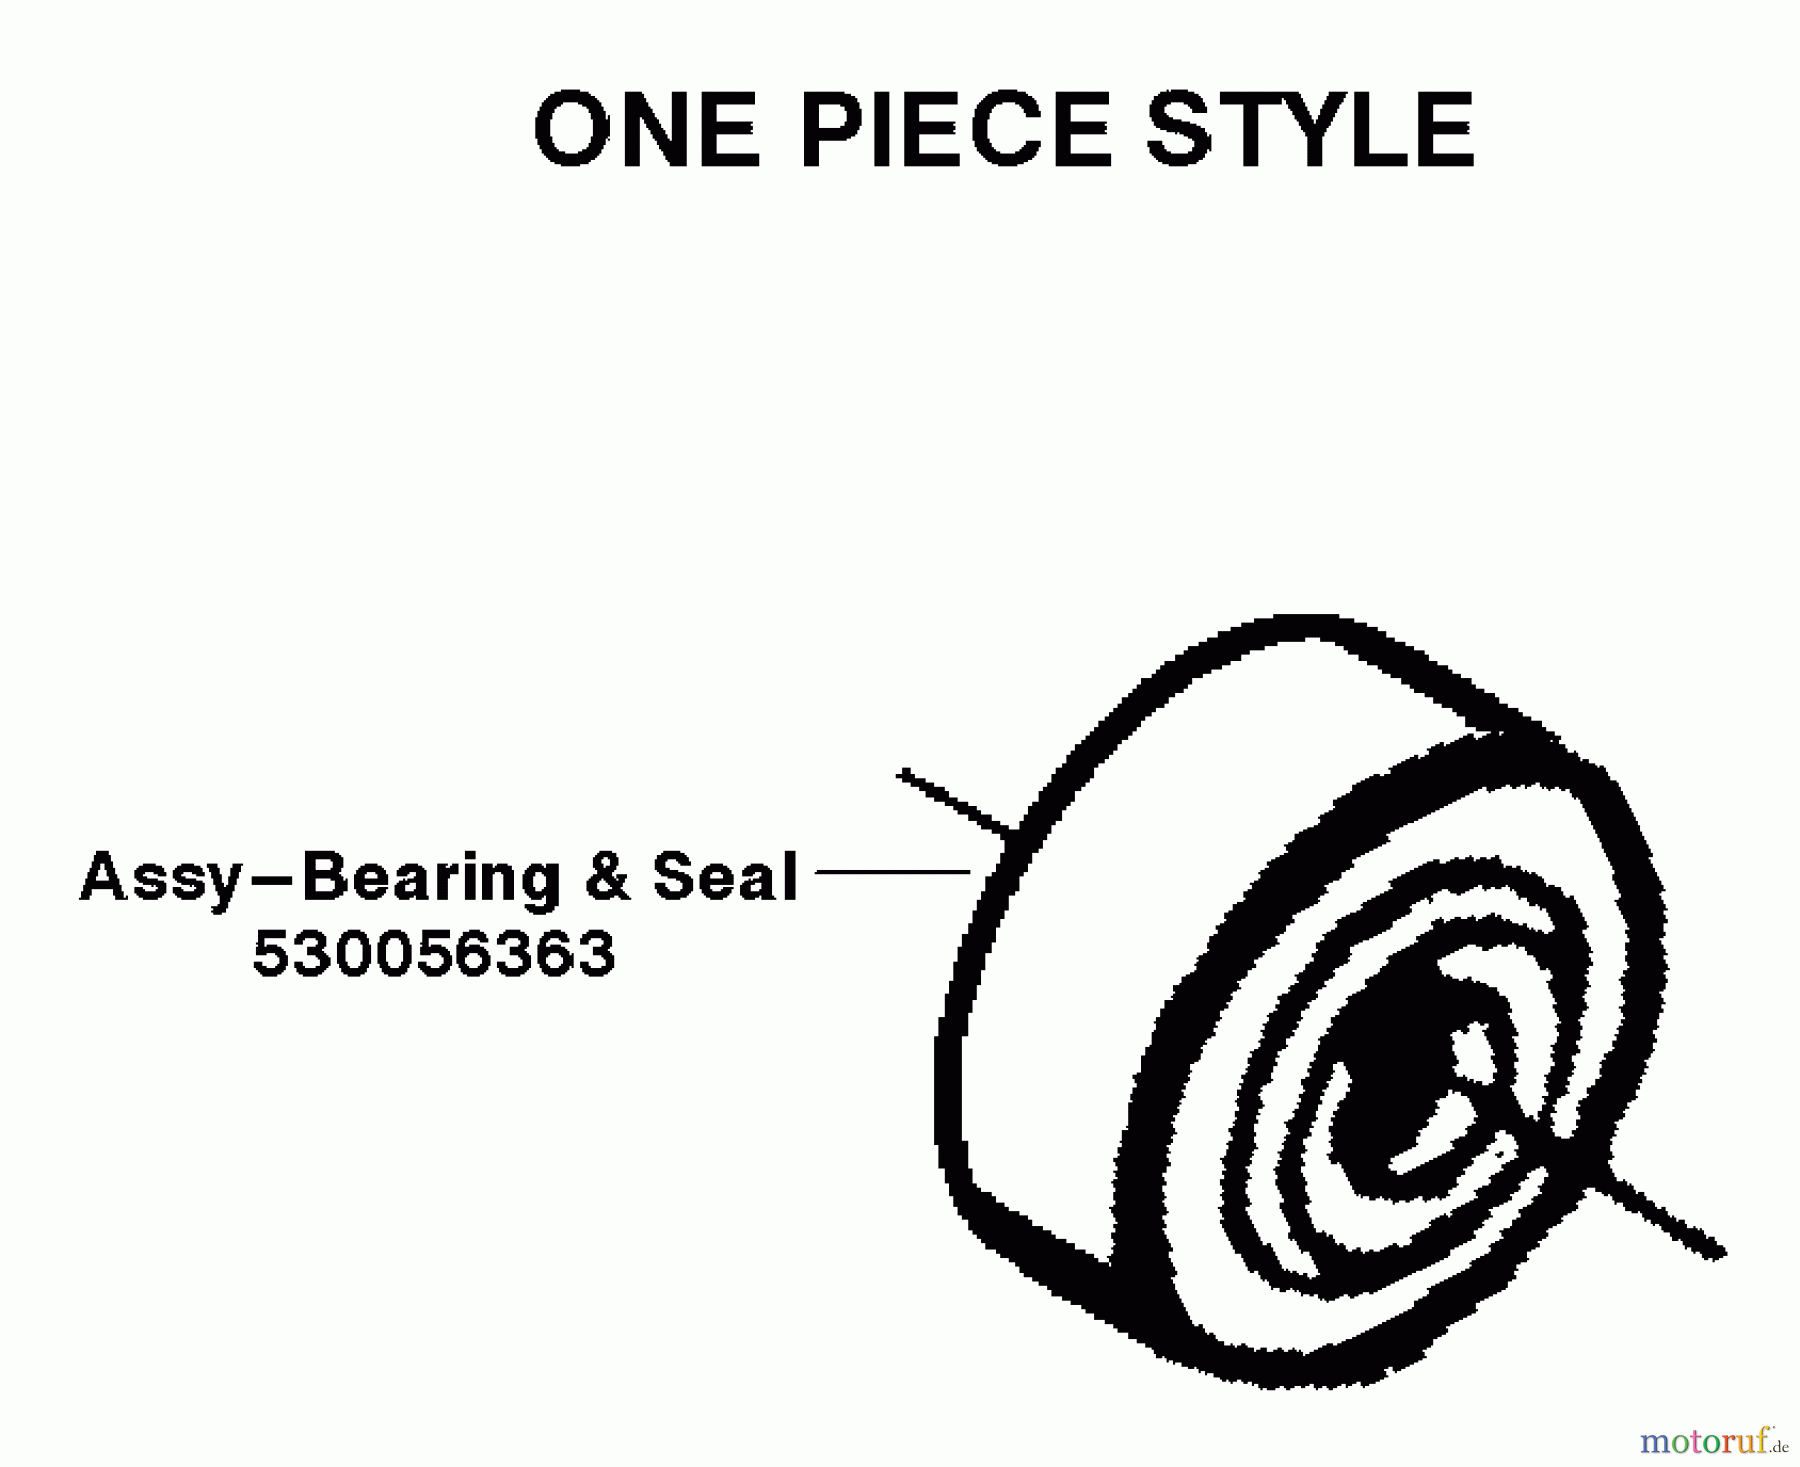  Poulan / Weed Eater Motorsägen PP295 (Type 1) - Poulan Pro Chainsaw Bearing & Seal - One Piece Style